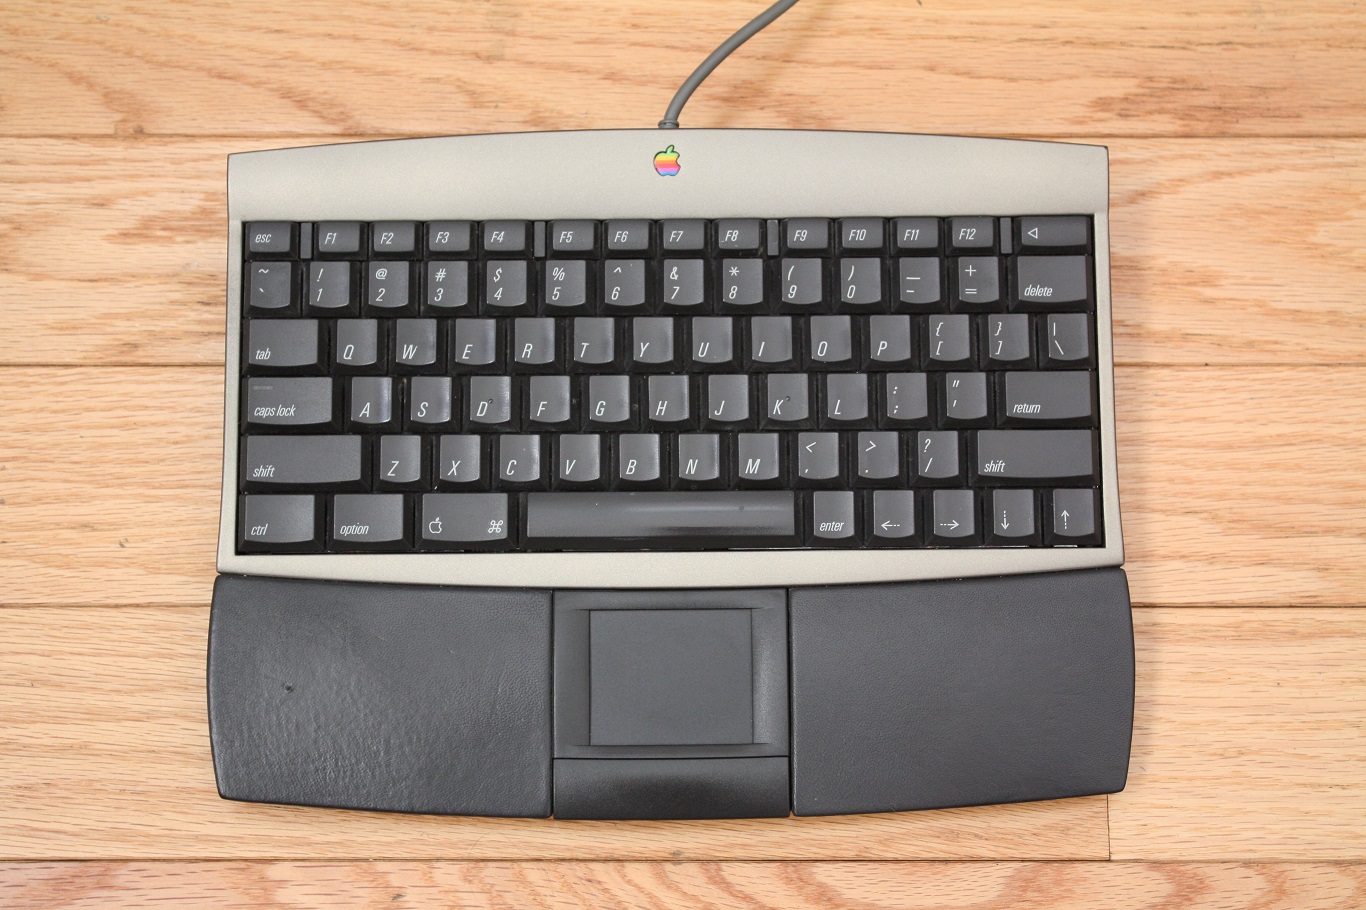 TAM keyboard - front